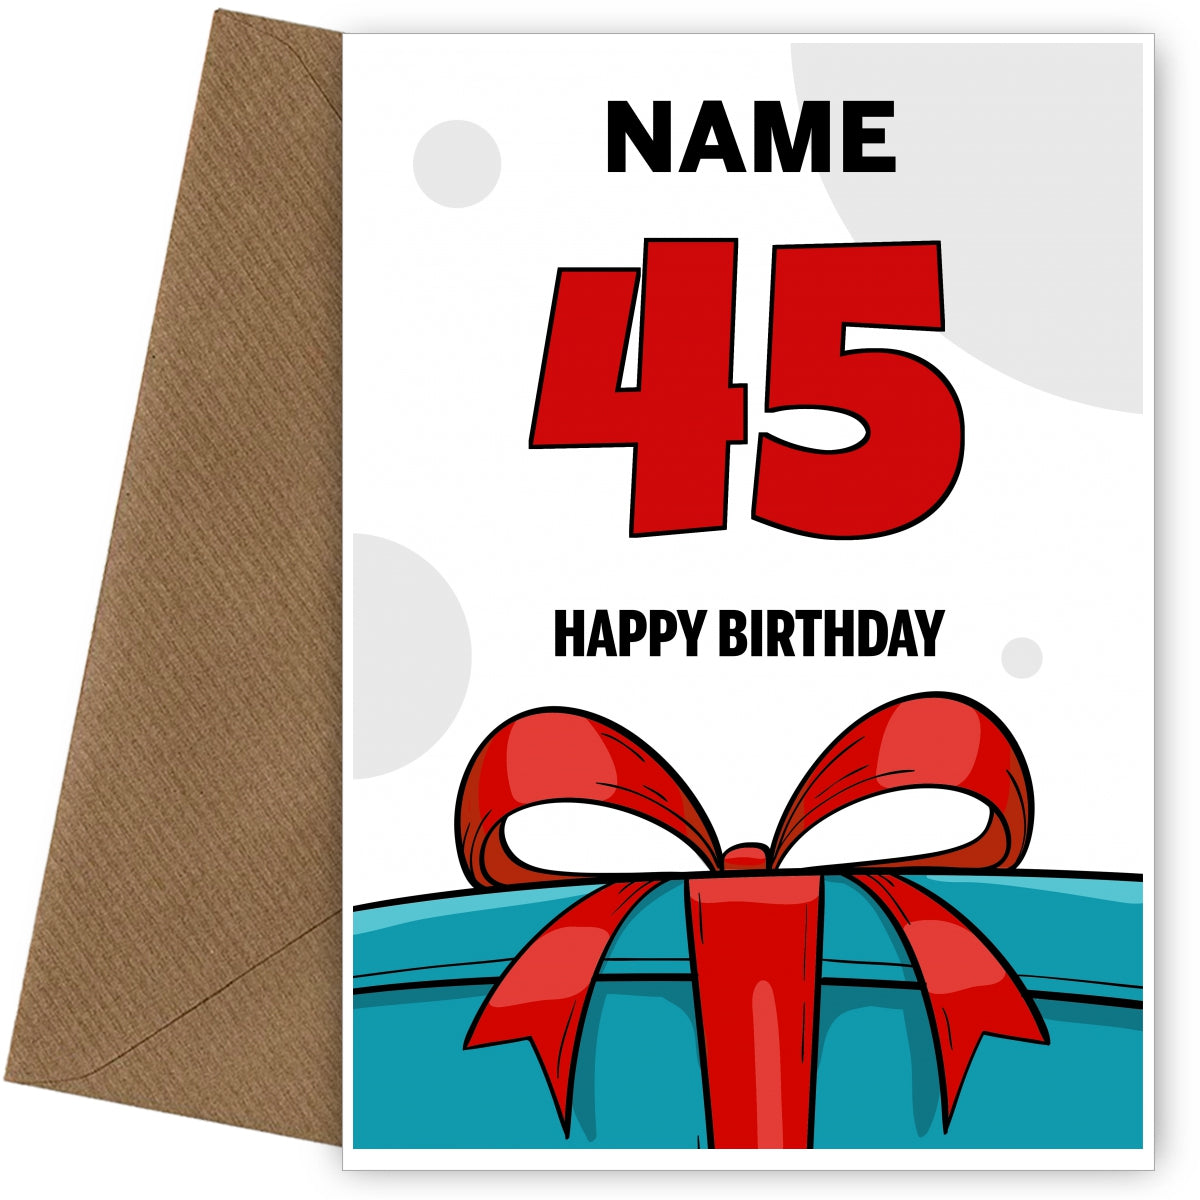 Happy 45th Birthday Card - Bold Gift / Present Design